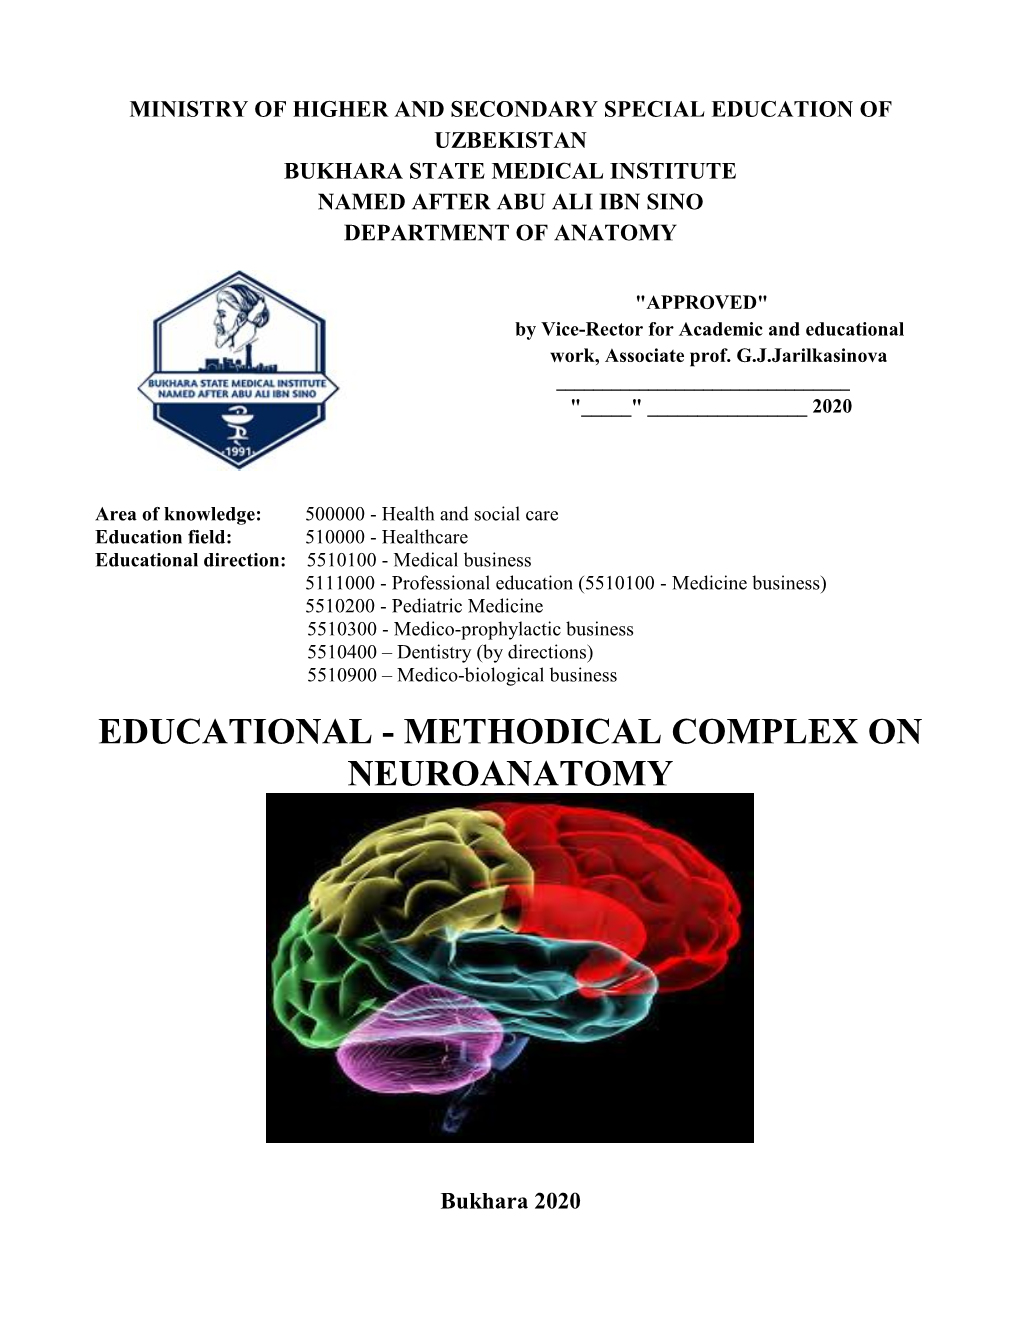 Methodical Complex on Neuroanatomy